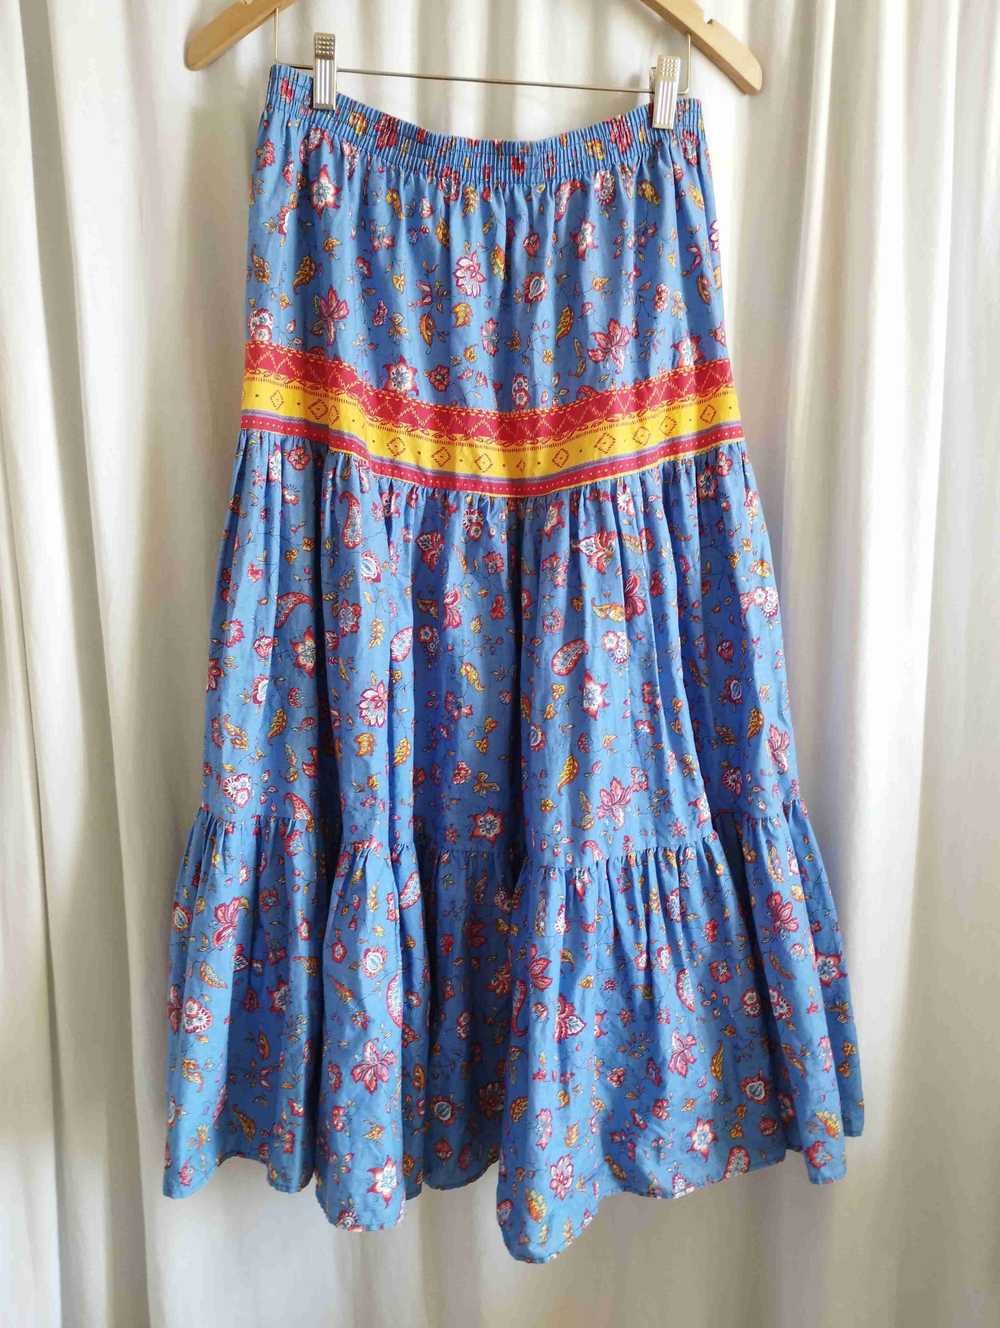 Cotton skirt - Provençal skirt 100% cotton, made … - image 3